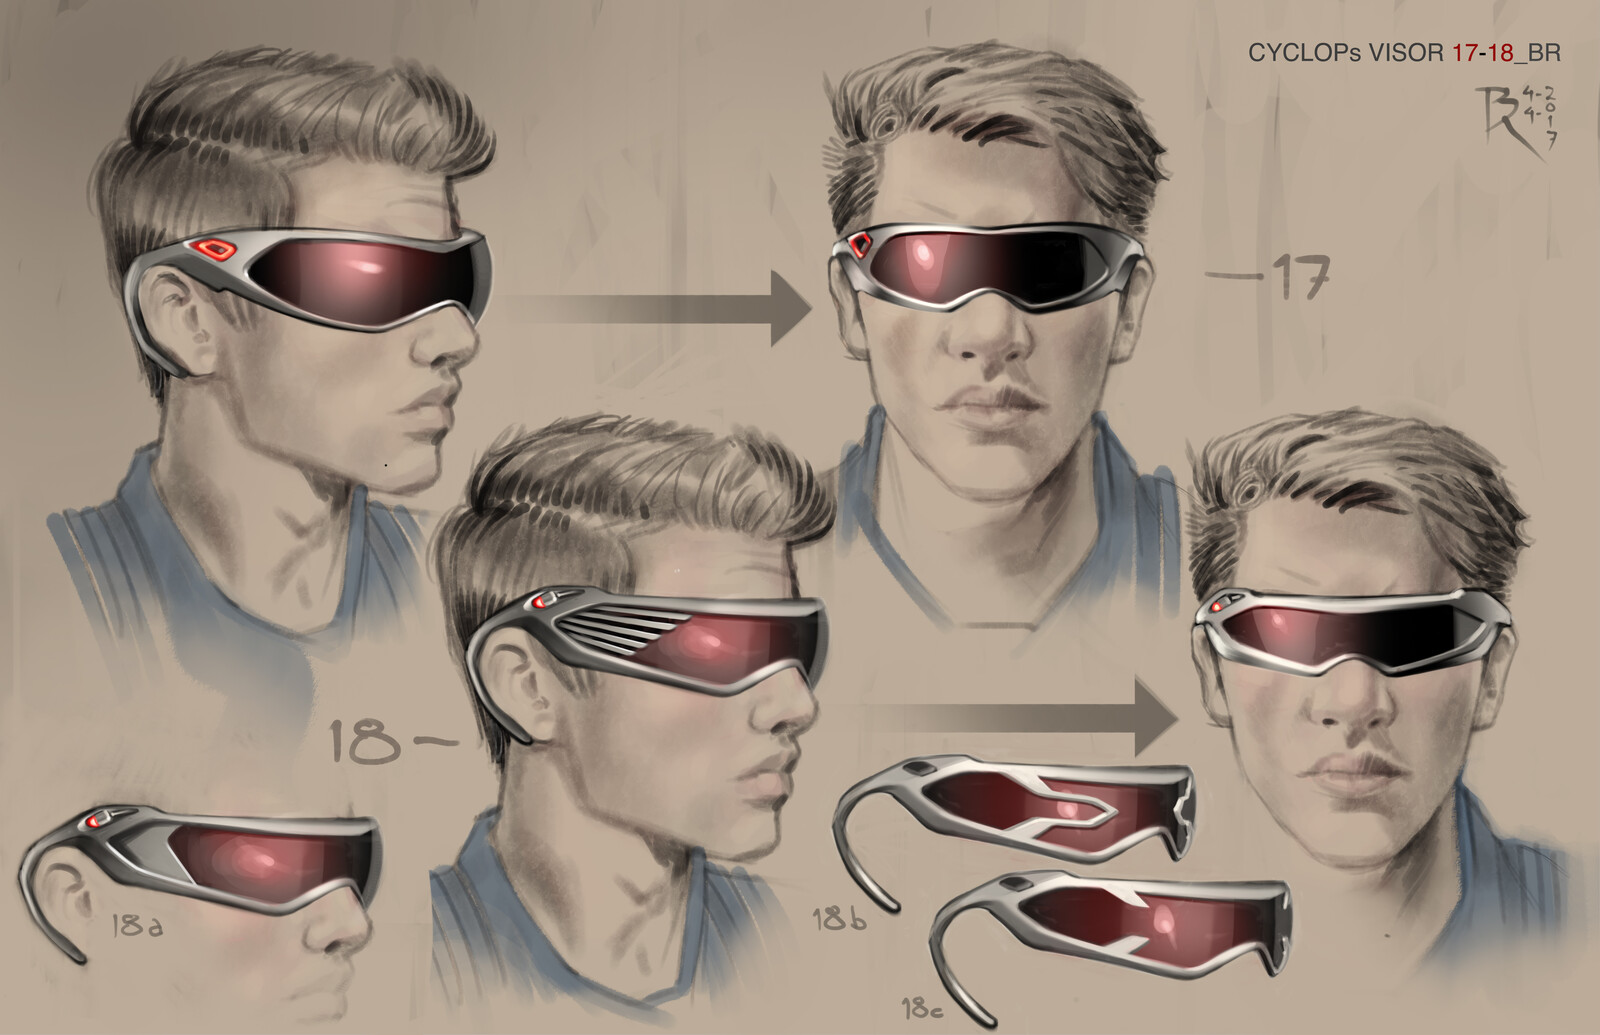 Cyclops' Visor 17-20